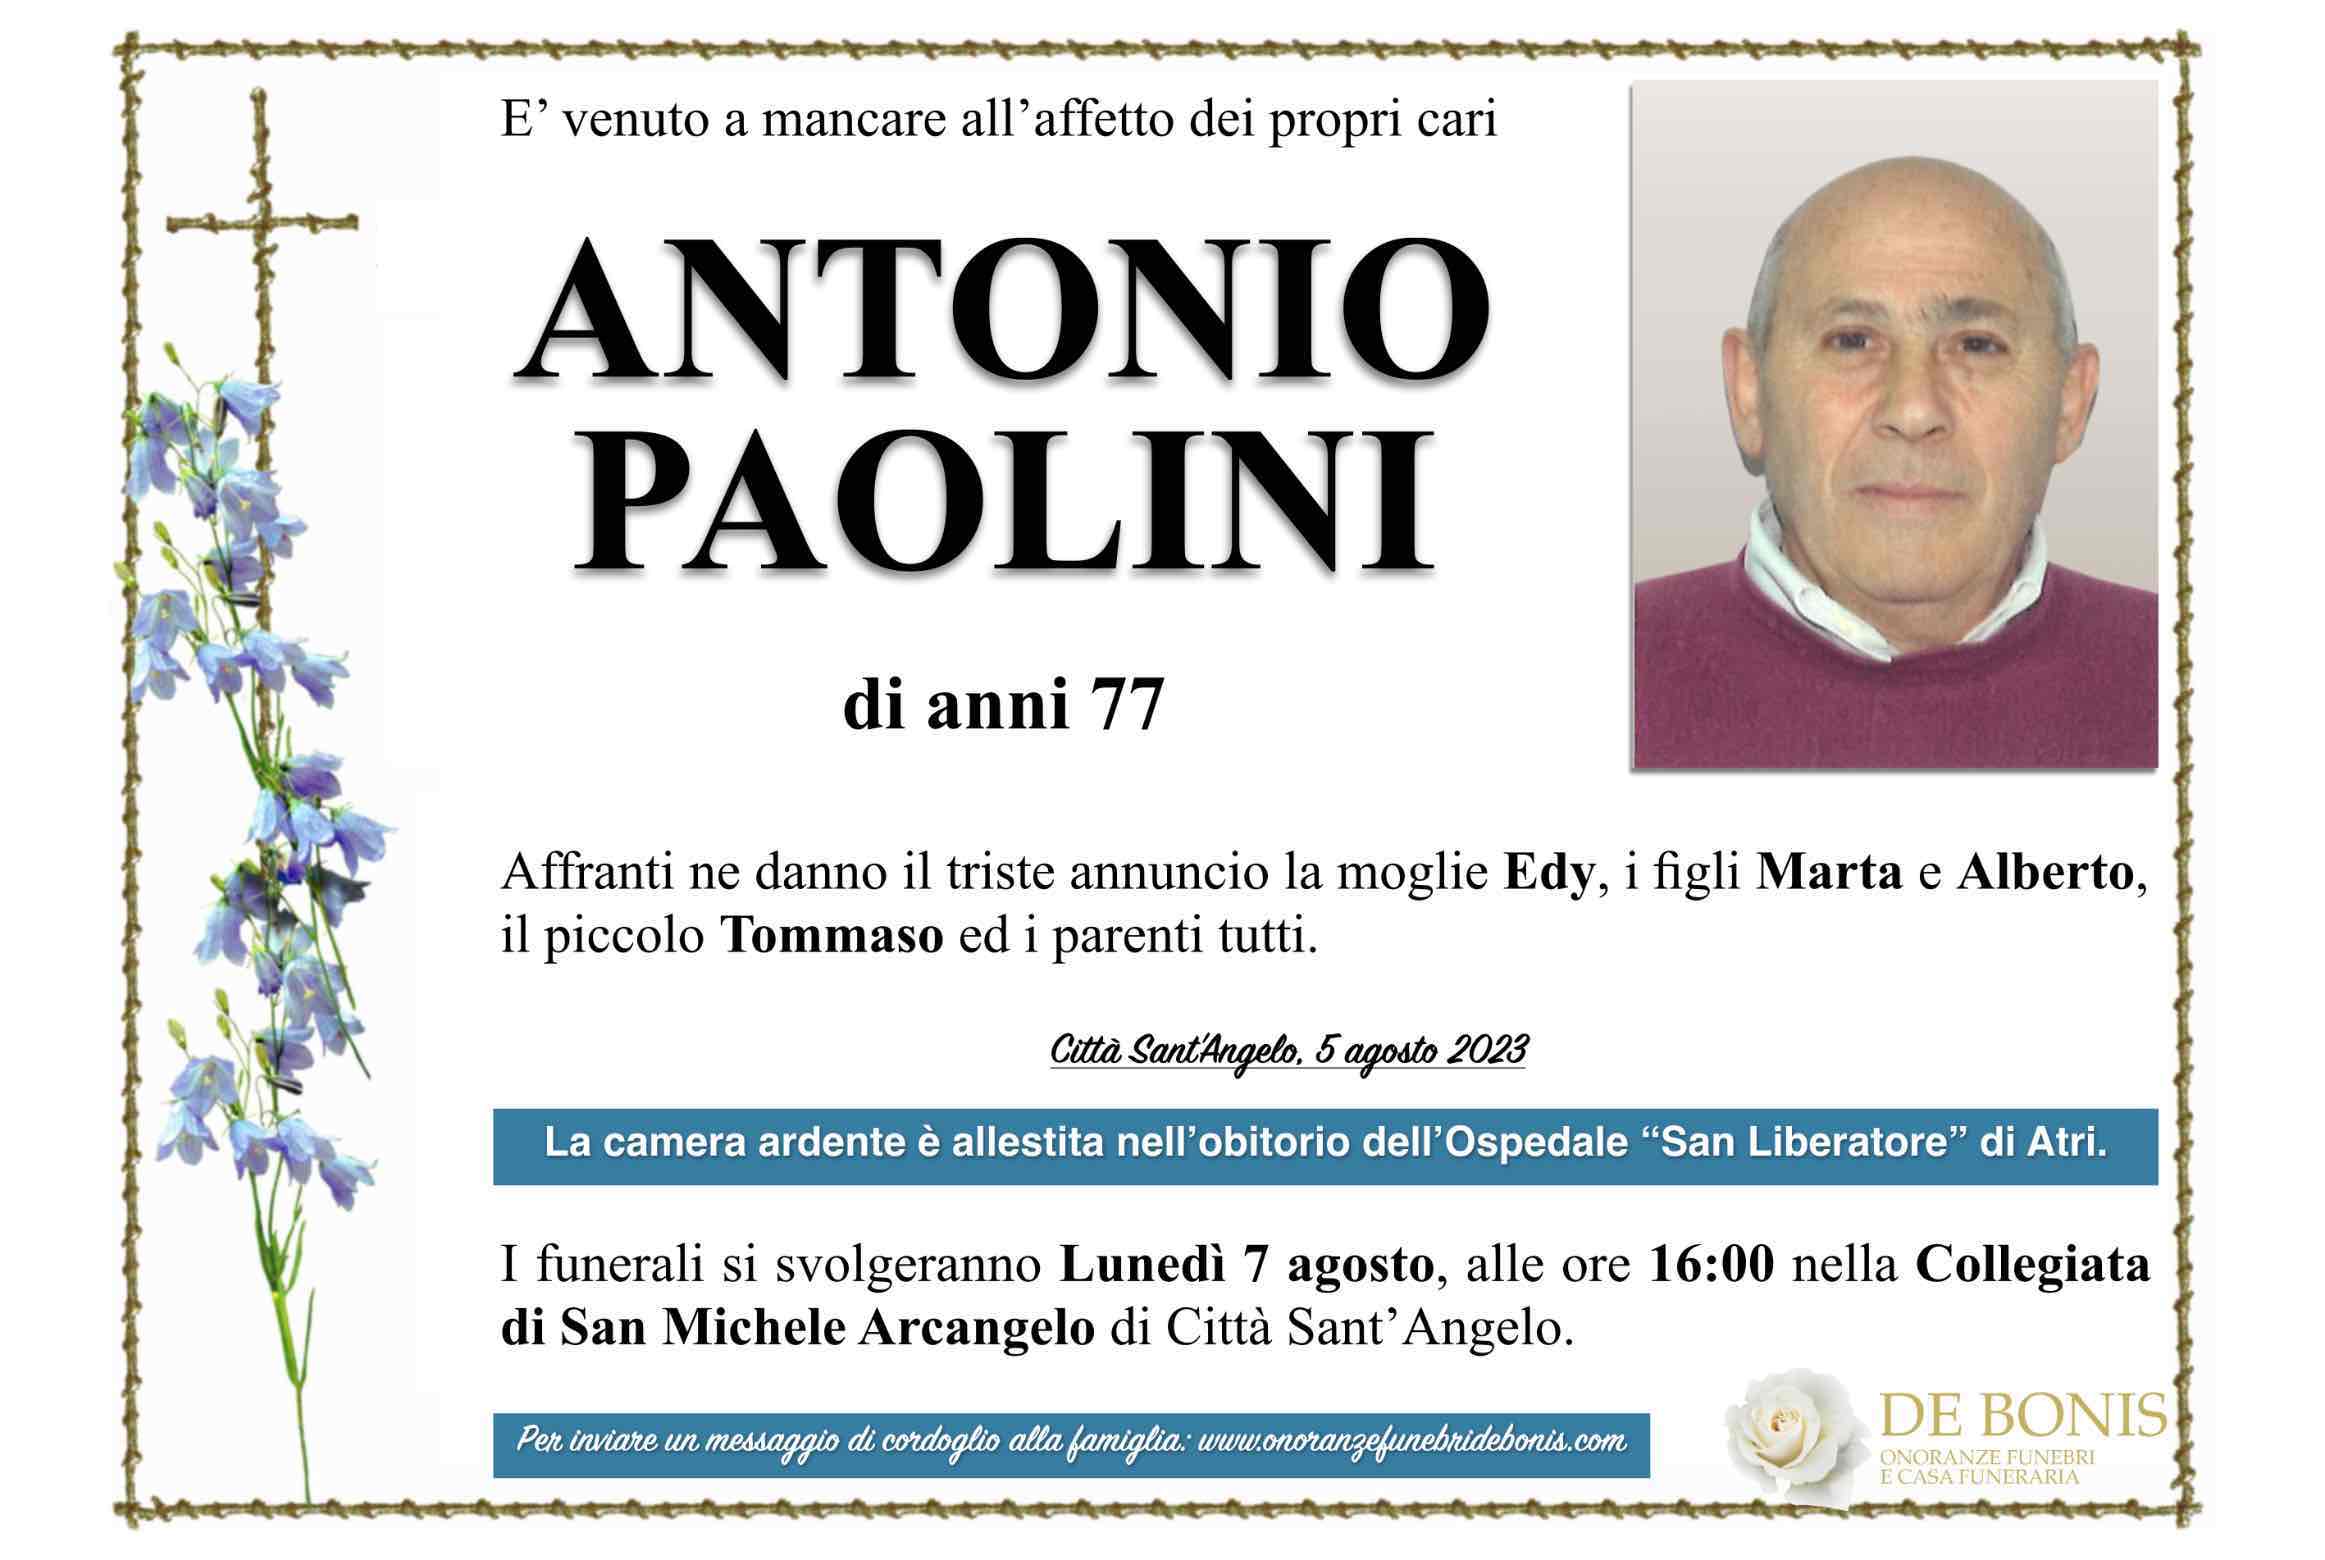 Antonio Paolini